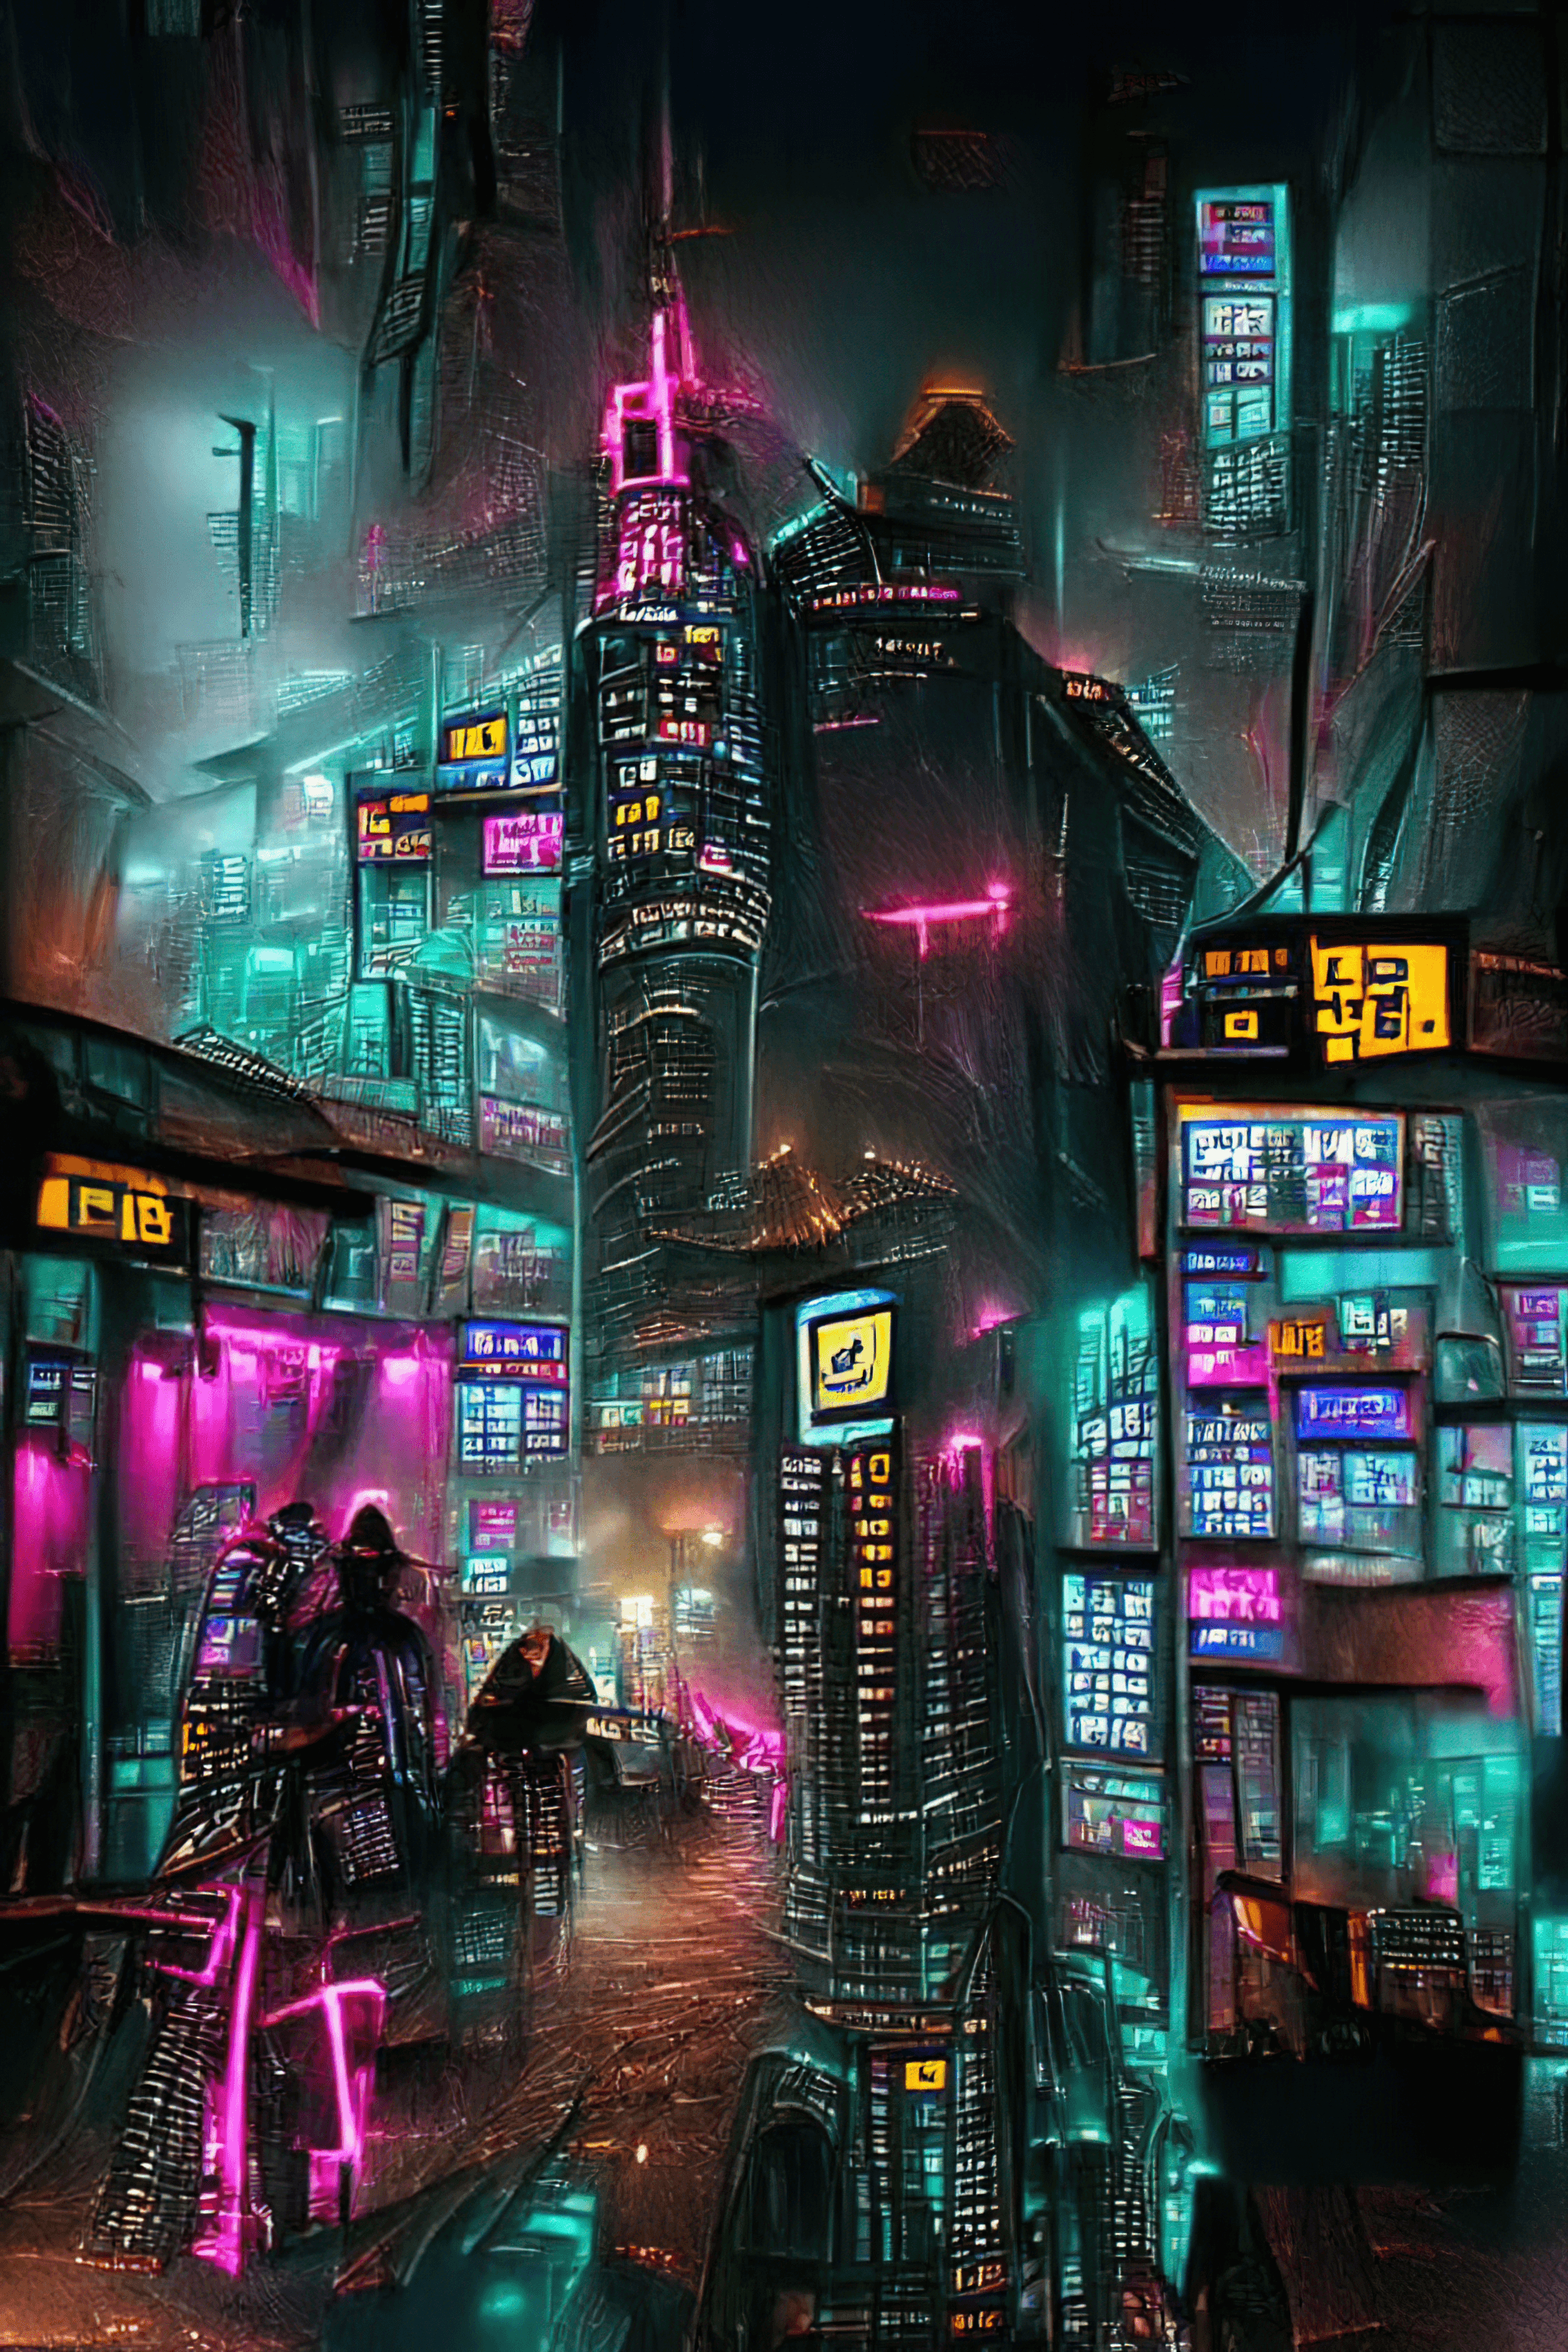 Seoul 55 Cyber